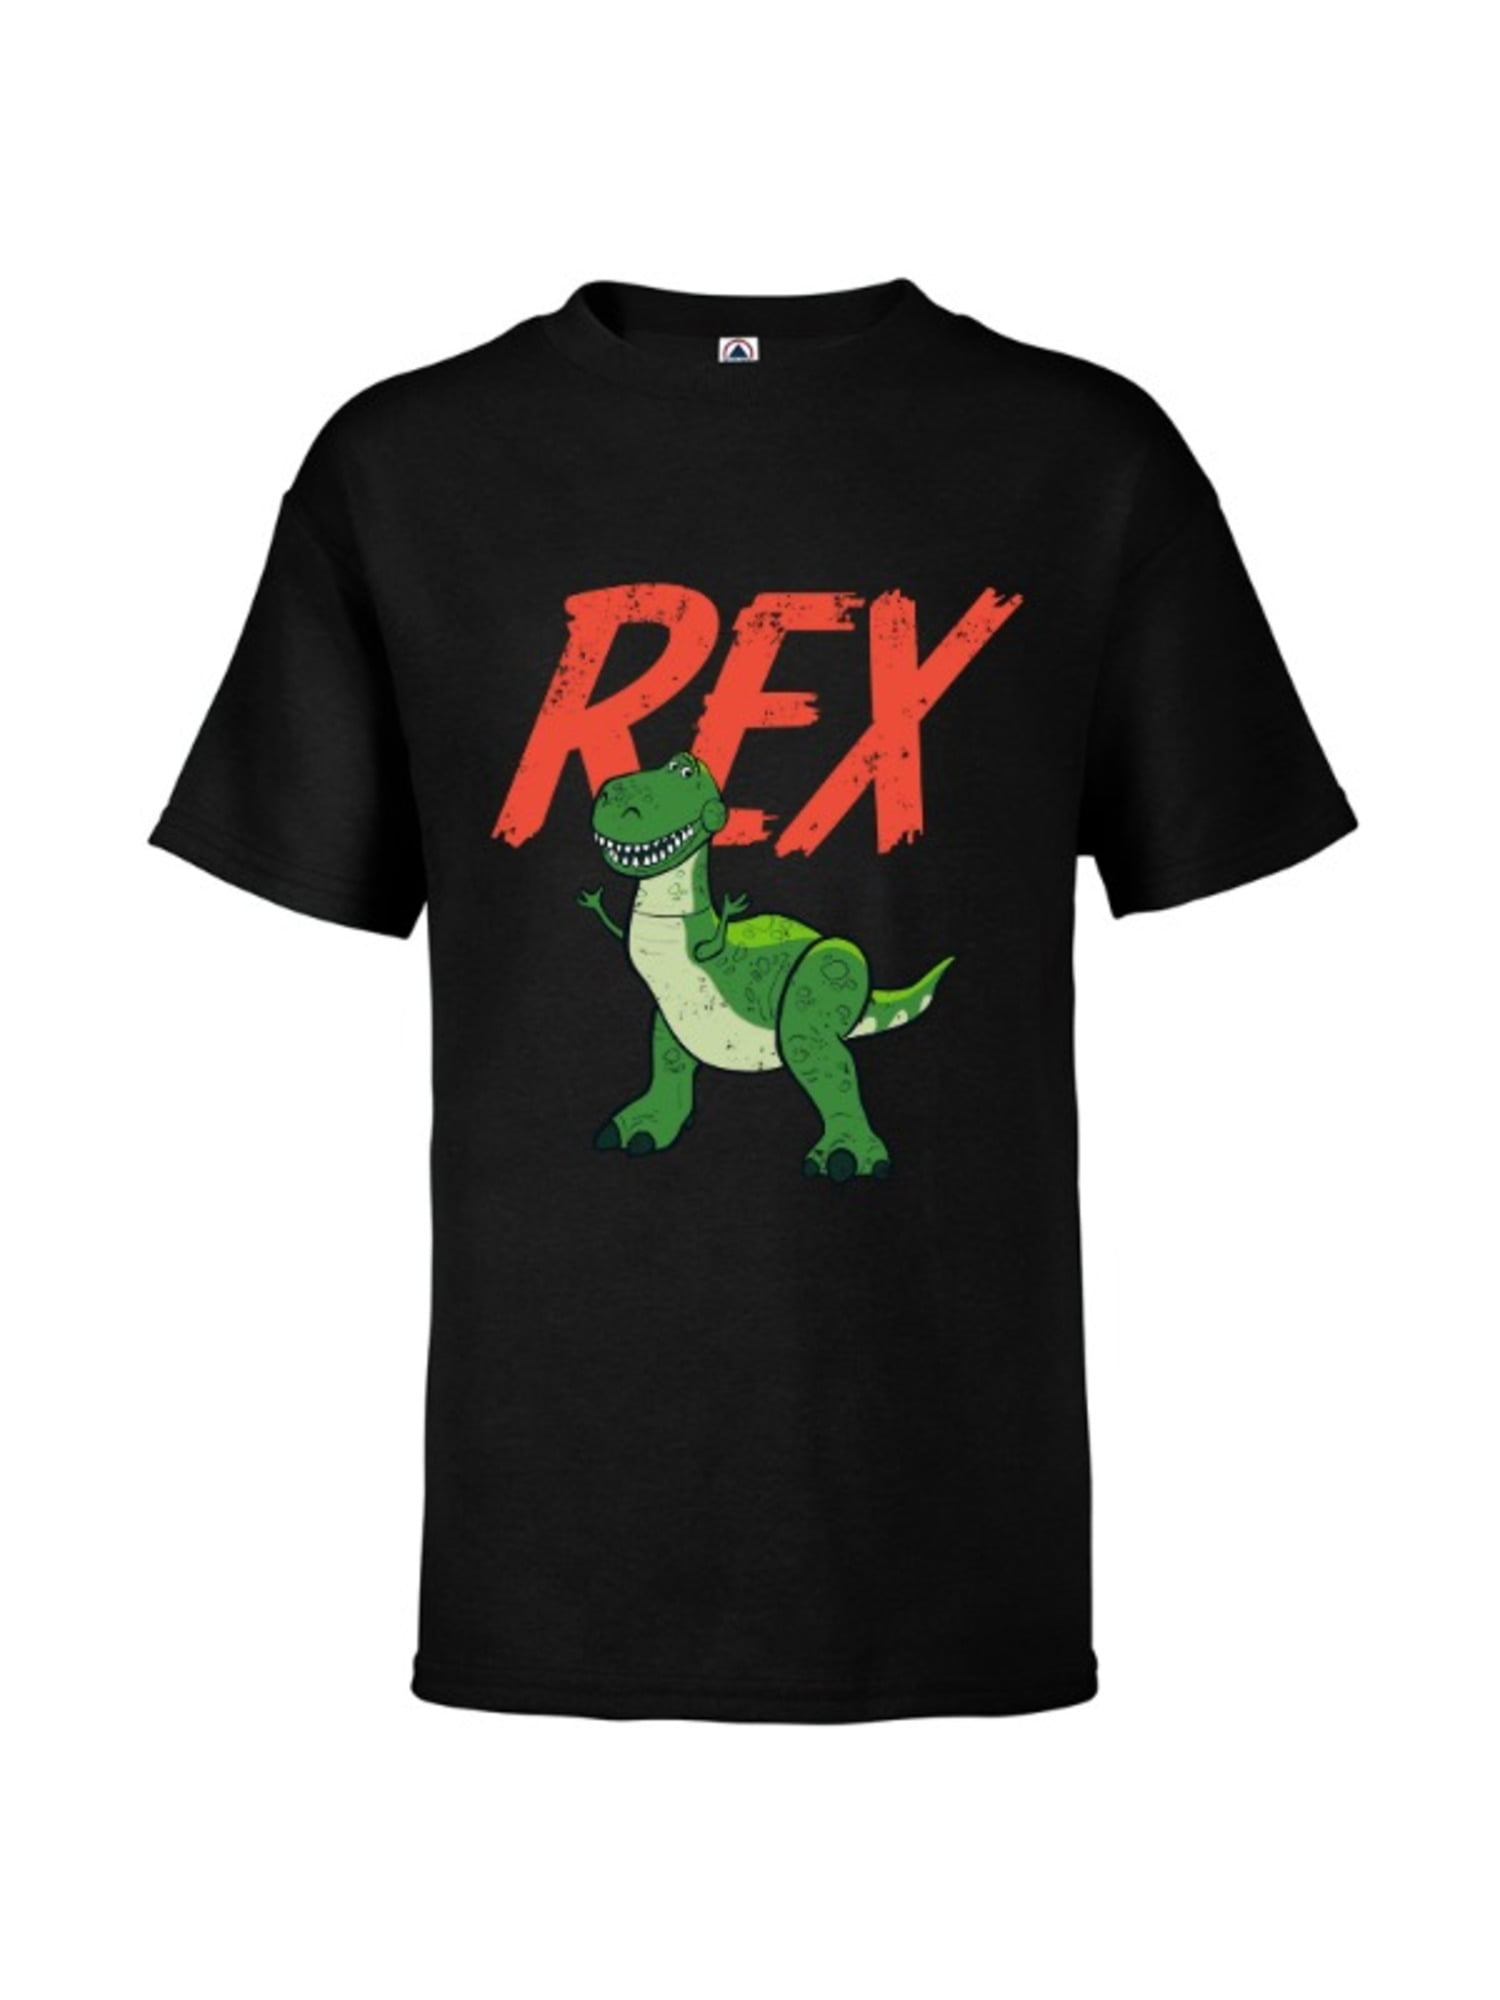 Buy Disney Pixar Toy Story 4 Camiseta Rex Dinosaur - Camiseta de manga  corta para niños - Personalizado-Negro Online at Lowest Price in Ubuy  Mexico. 792785100